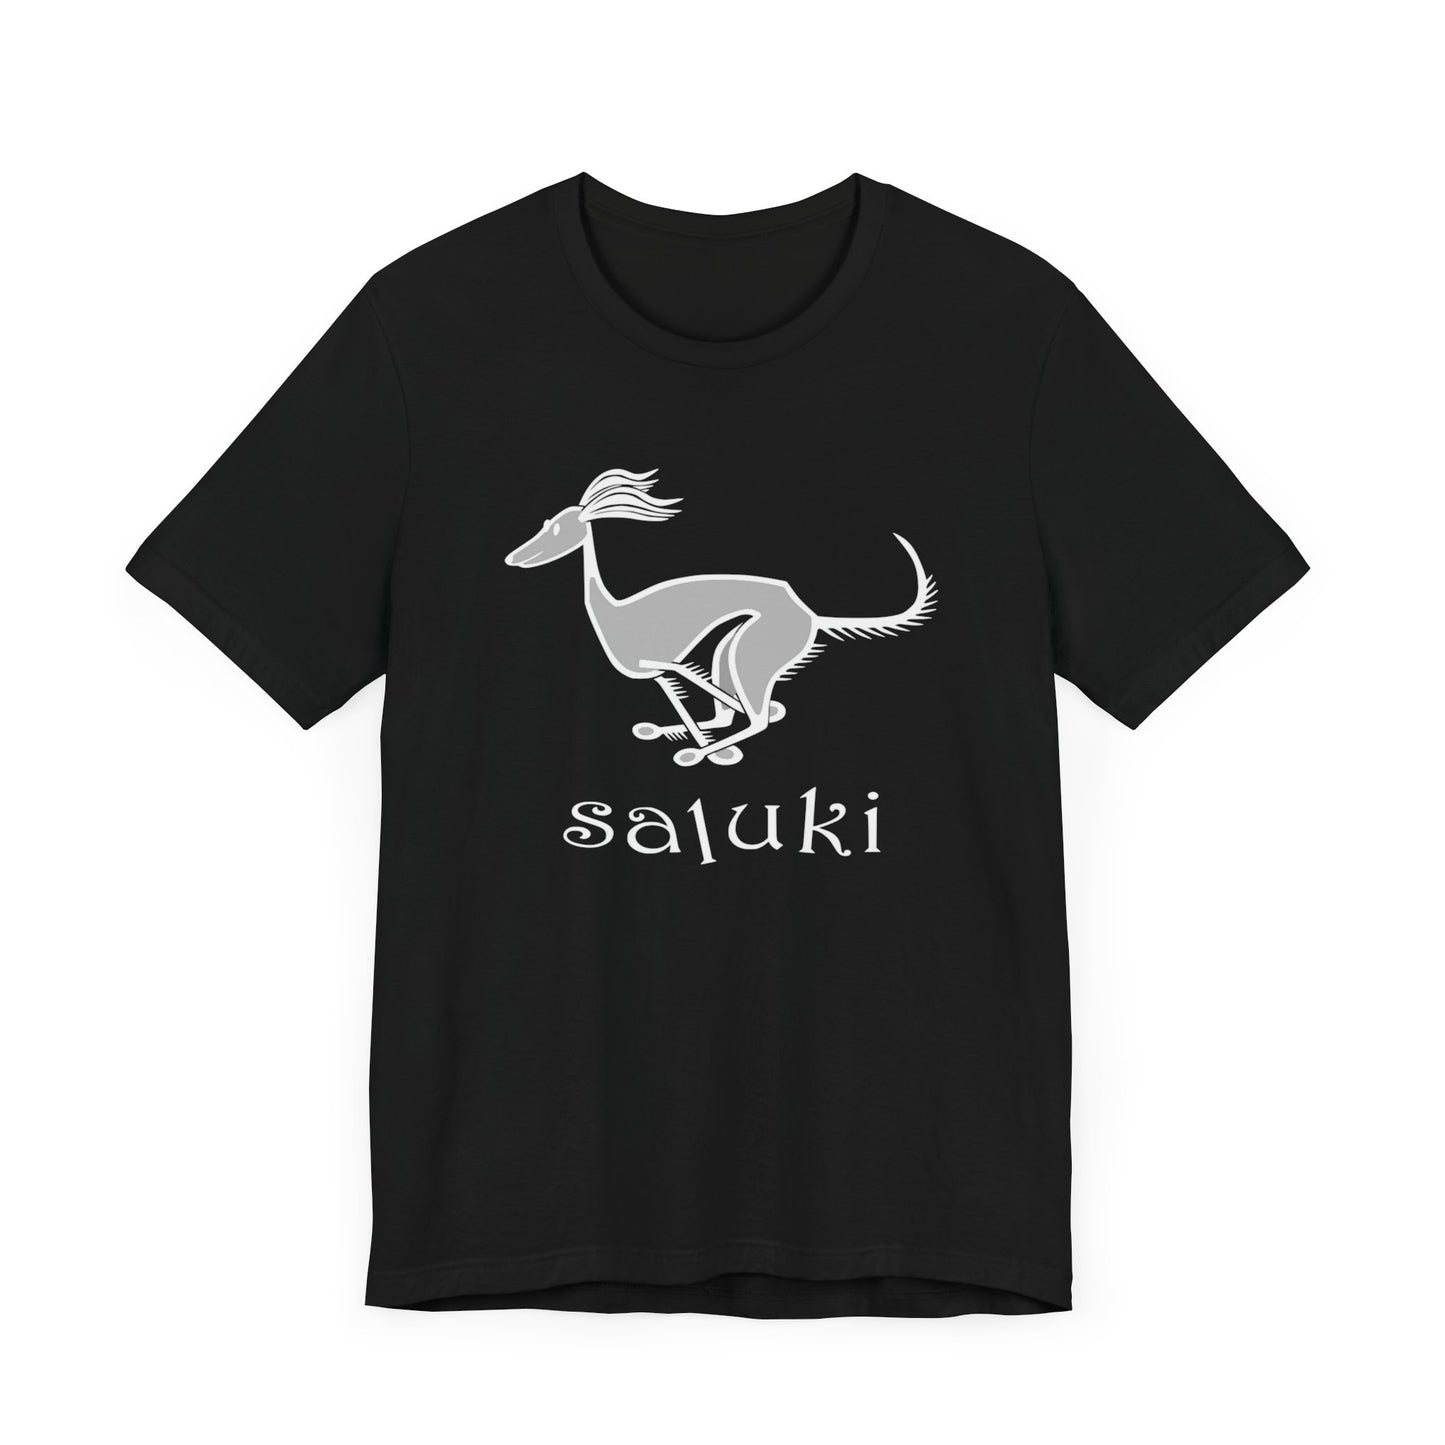 Unisex Jersey Short Sleeve Tee in black featuring a cartoon style Saluki dog galloping.